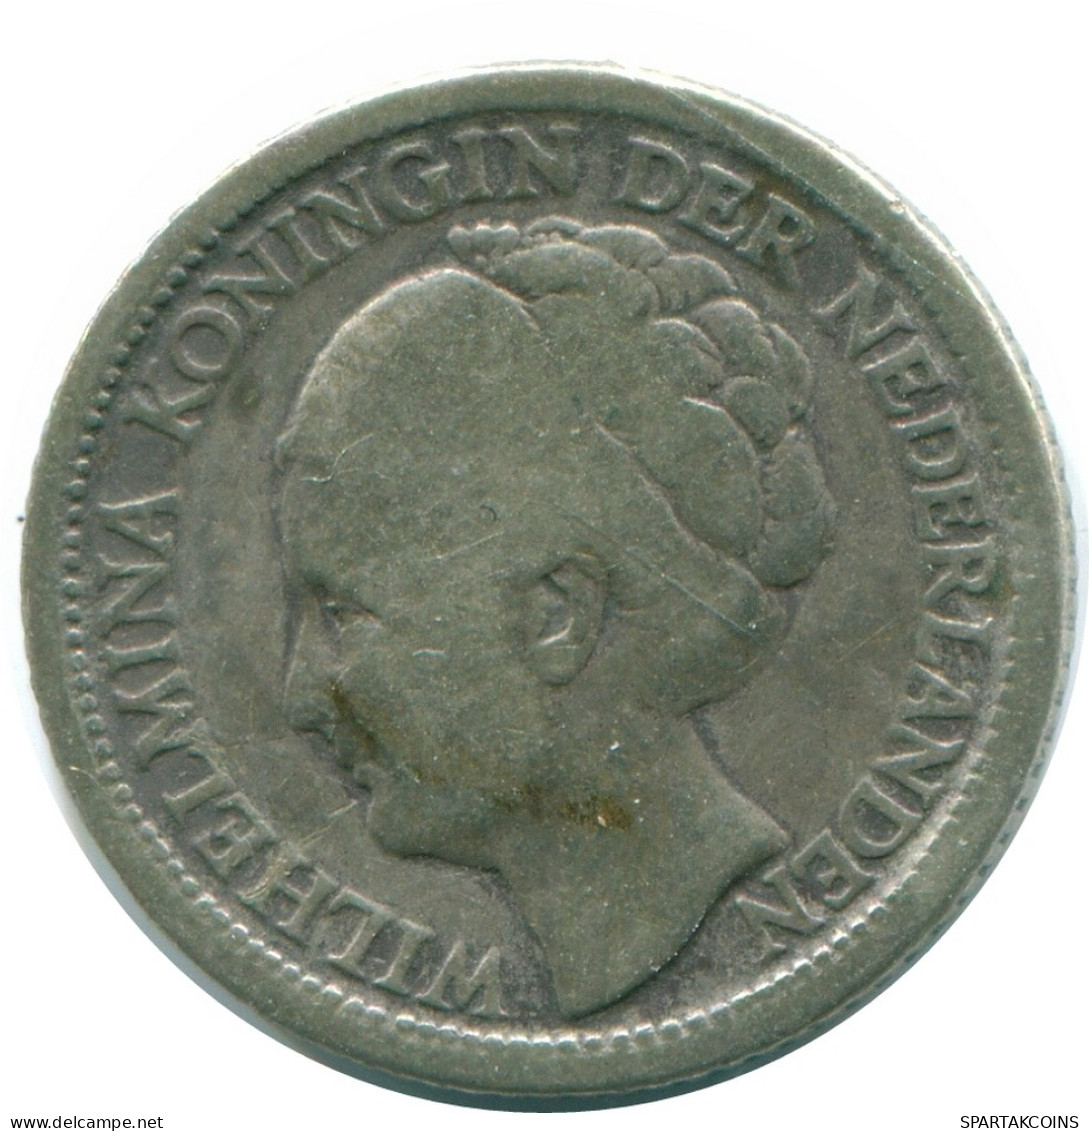 1/4 GULDEN 1944 CURACAO Netherlands SILVER Colonial Coin #NL10608.4.U - Curaçao